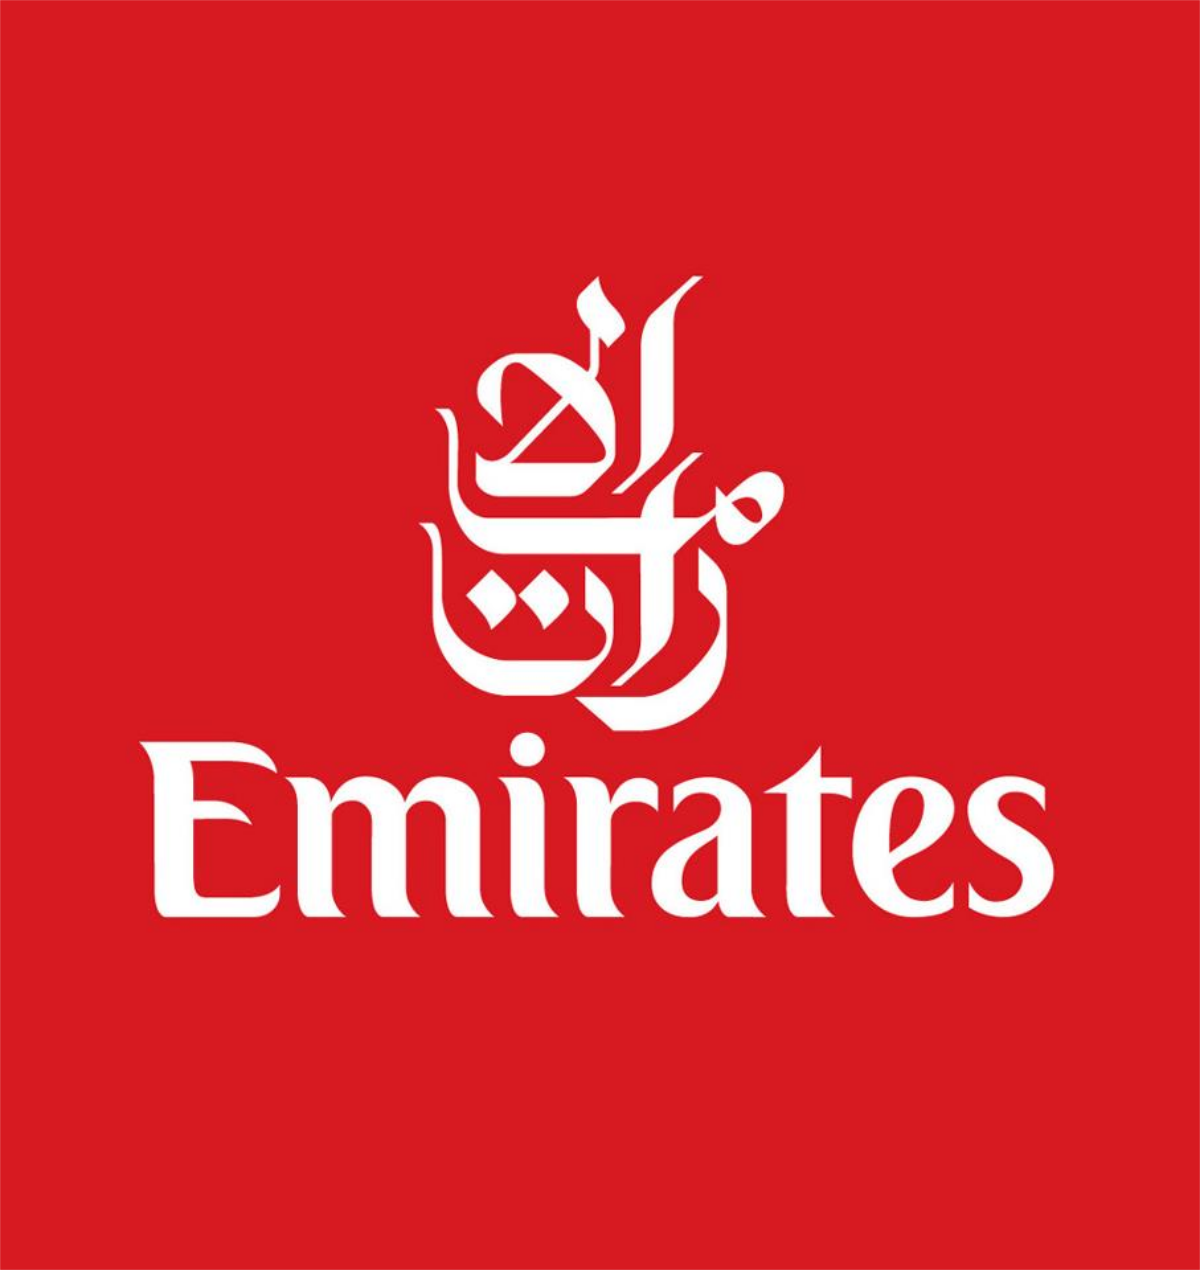 1200px-Emirates_logo.svg_